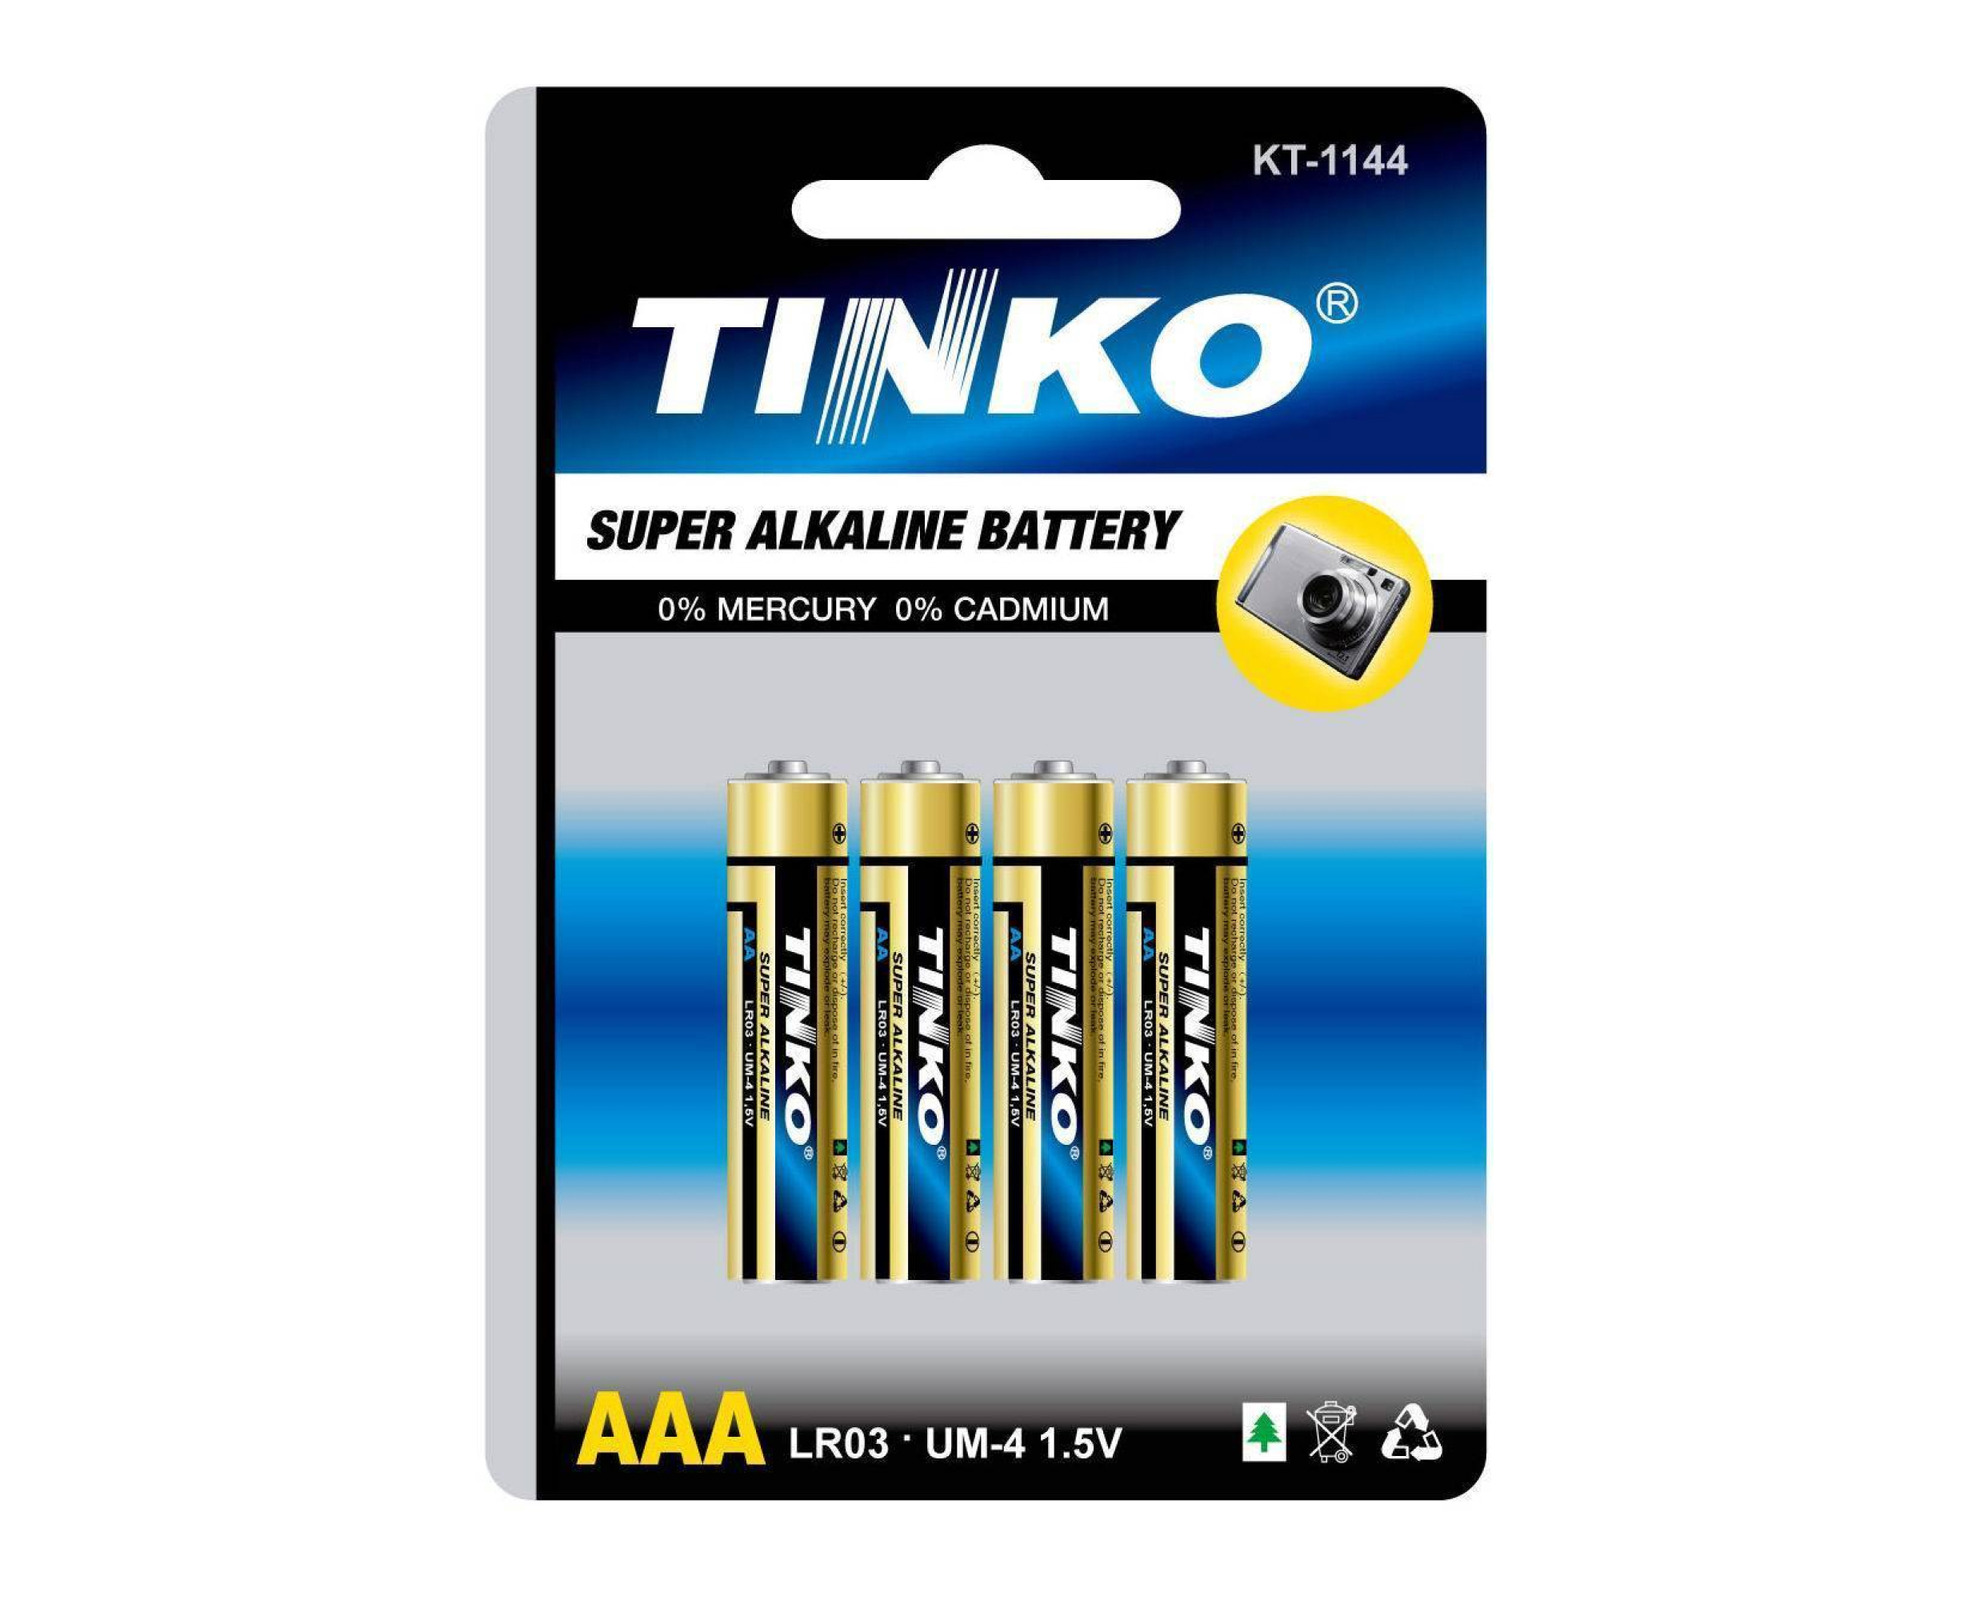 tinko 0% hg super alkaline battery